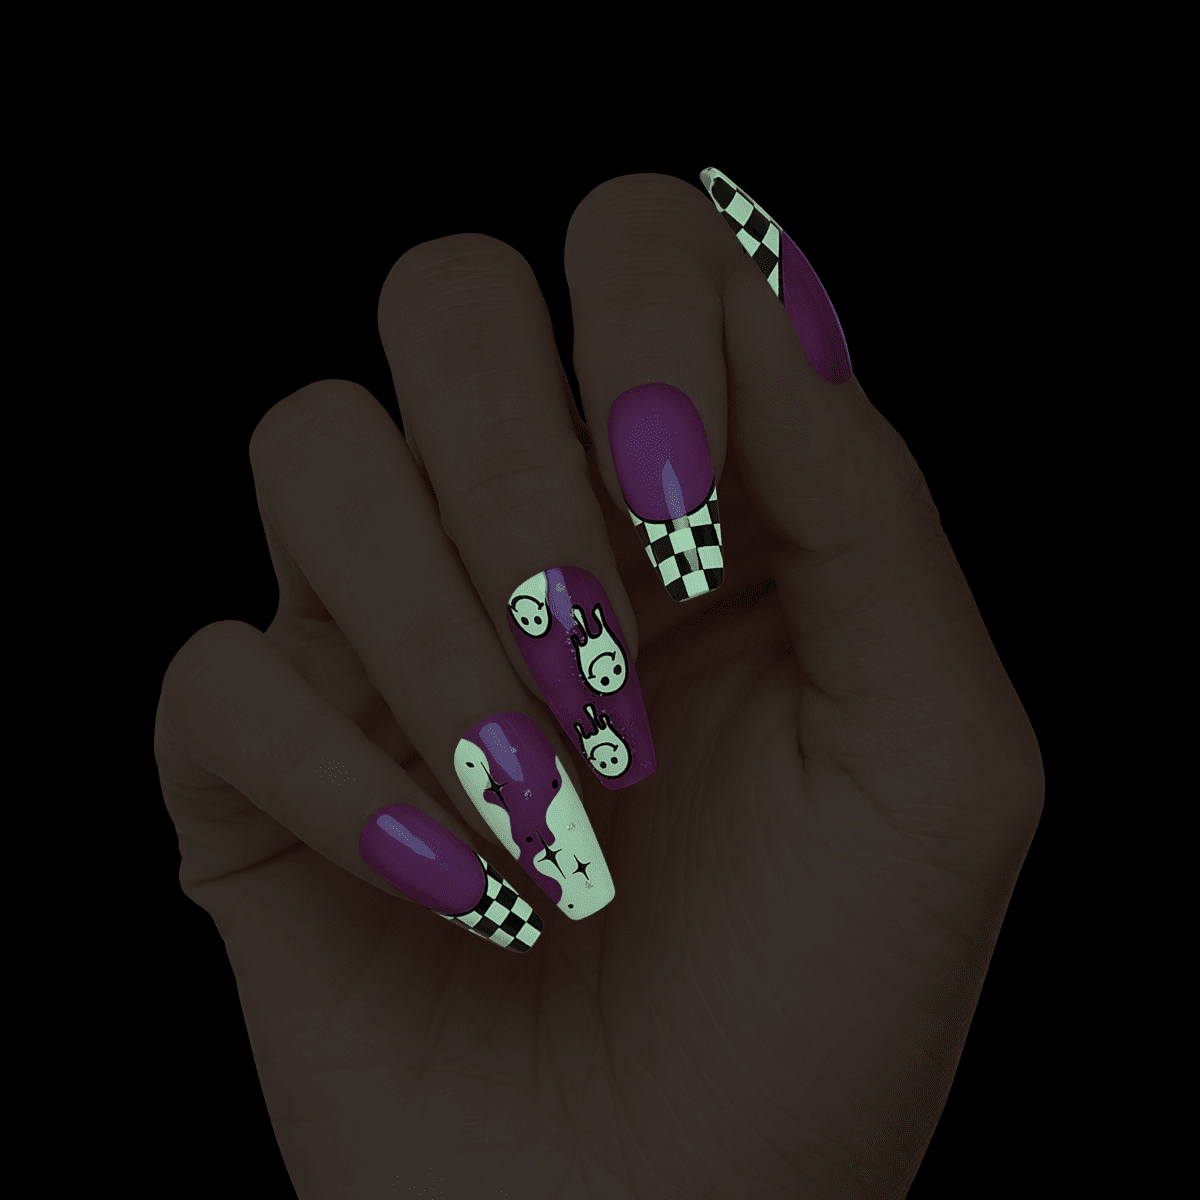 Salon Design Halloween Nails - Boo To You